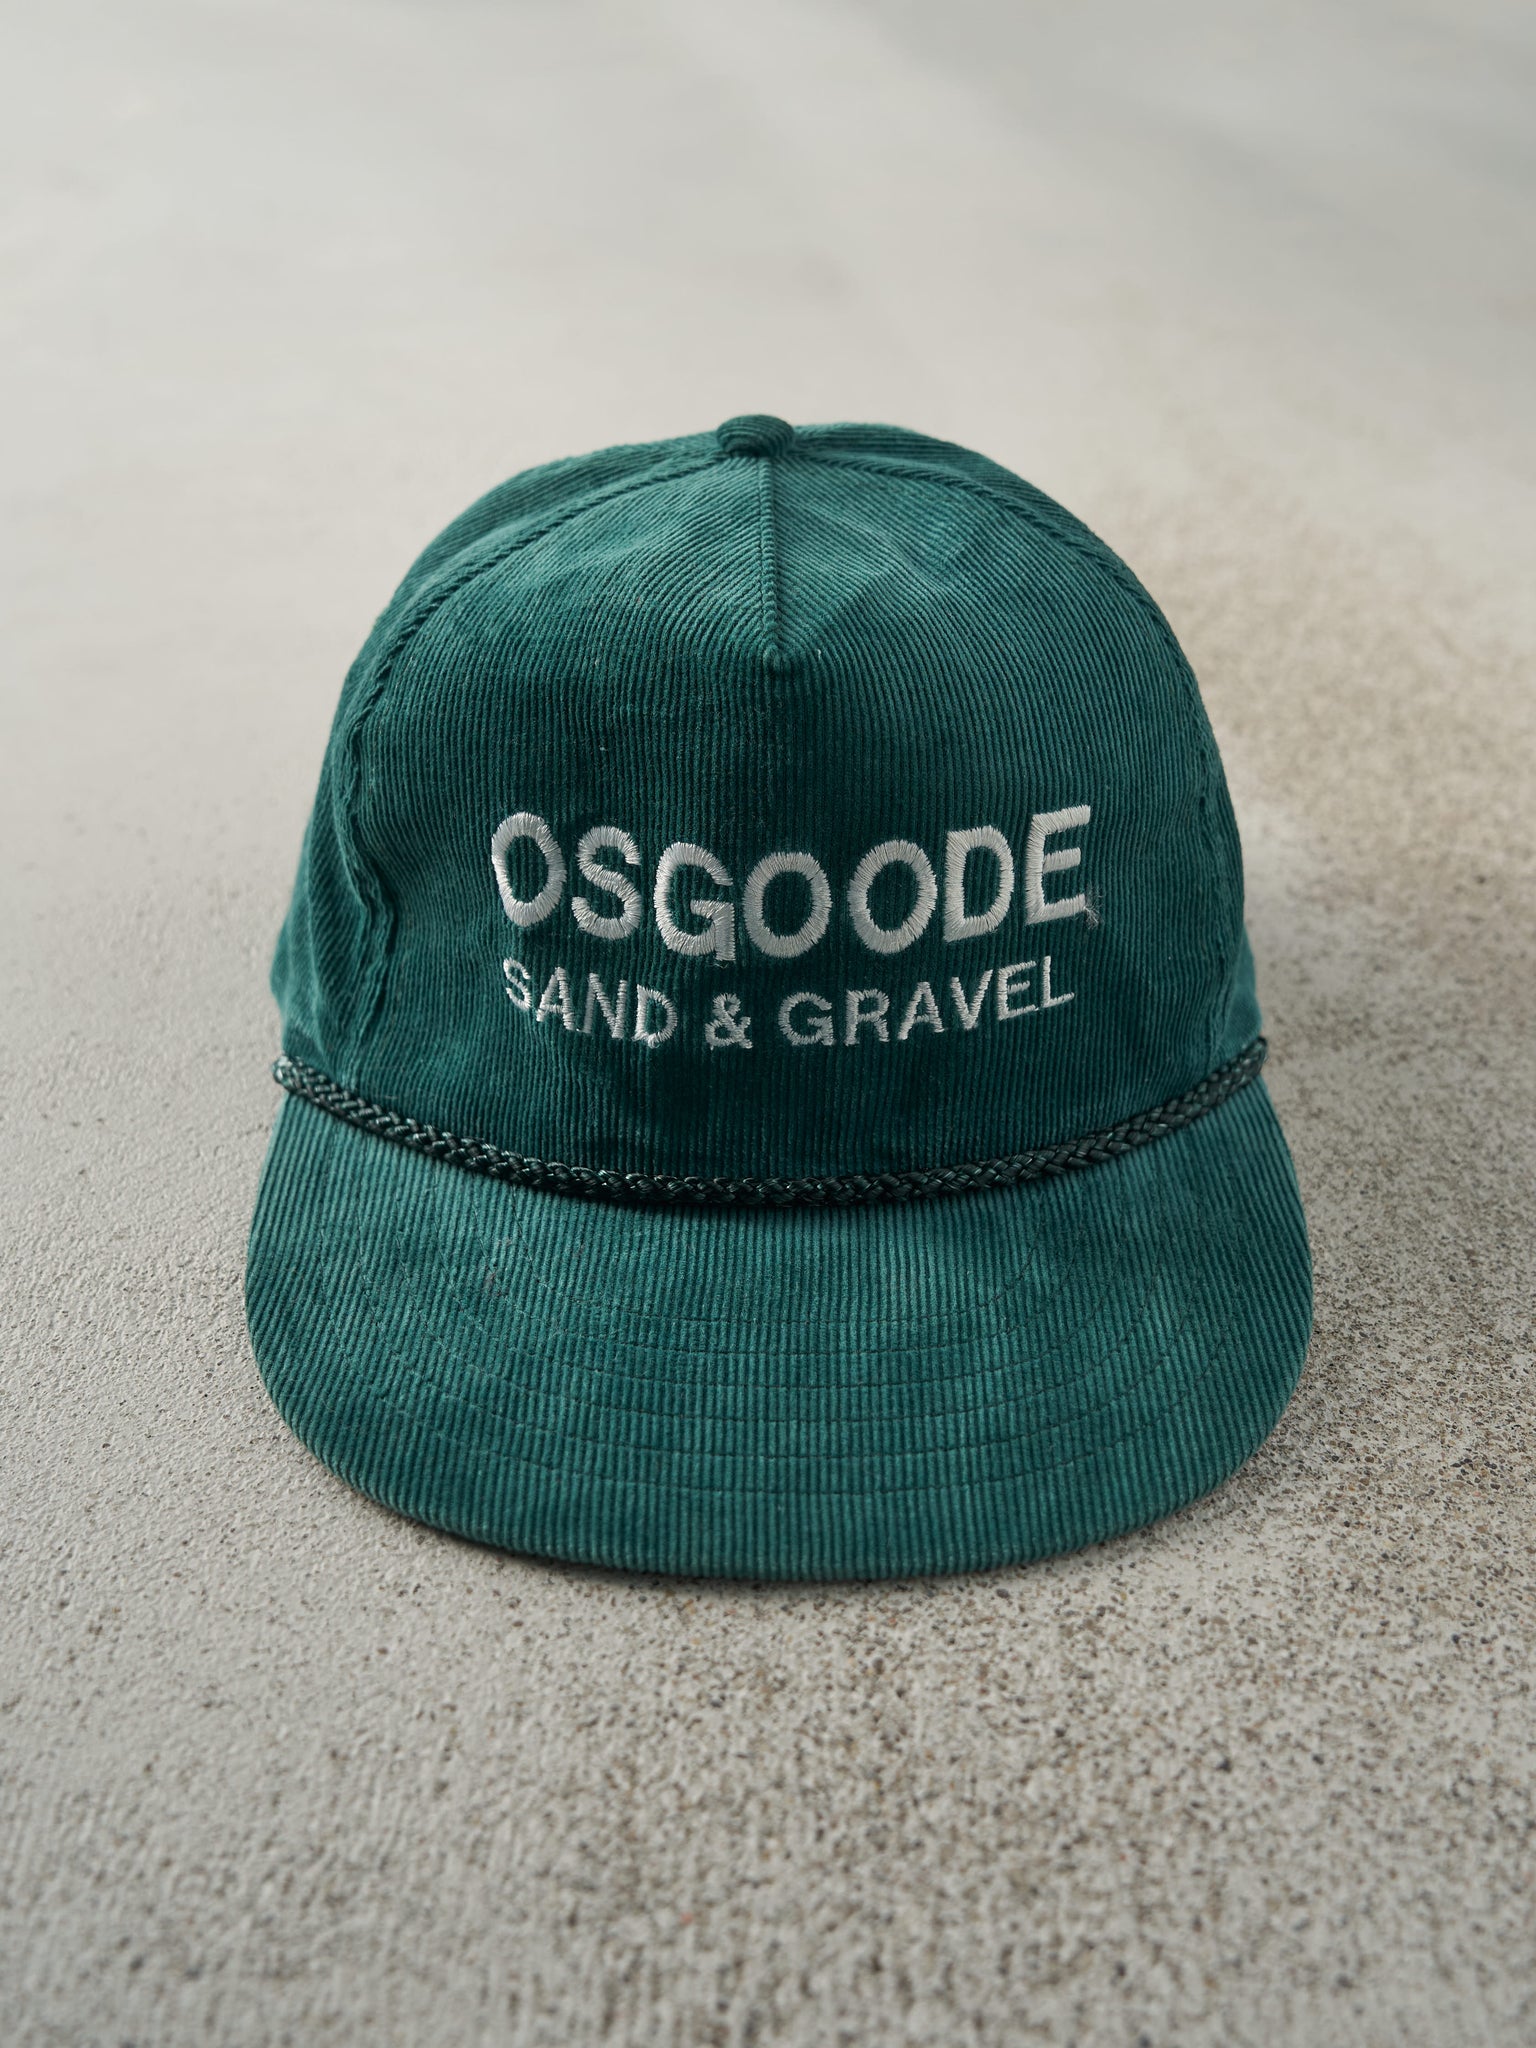 Vintage 80s Green Embroidered Osgoode Corduroy Snapback Hat